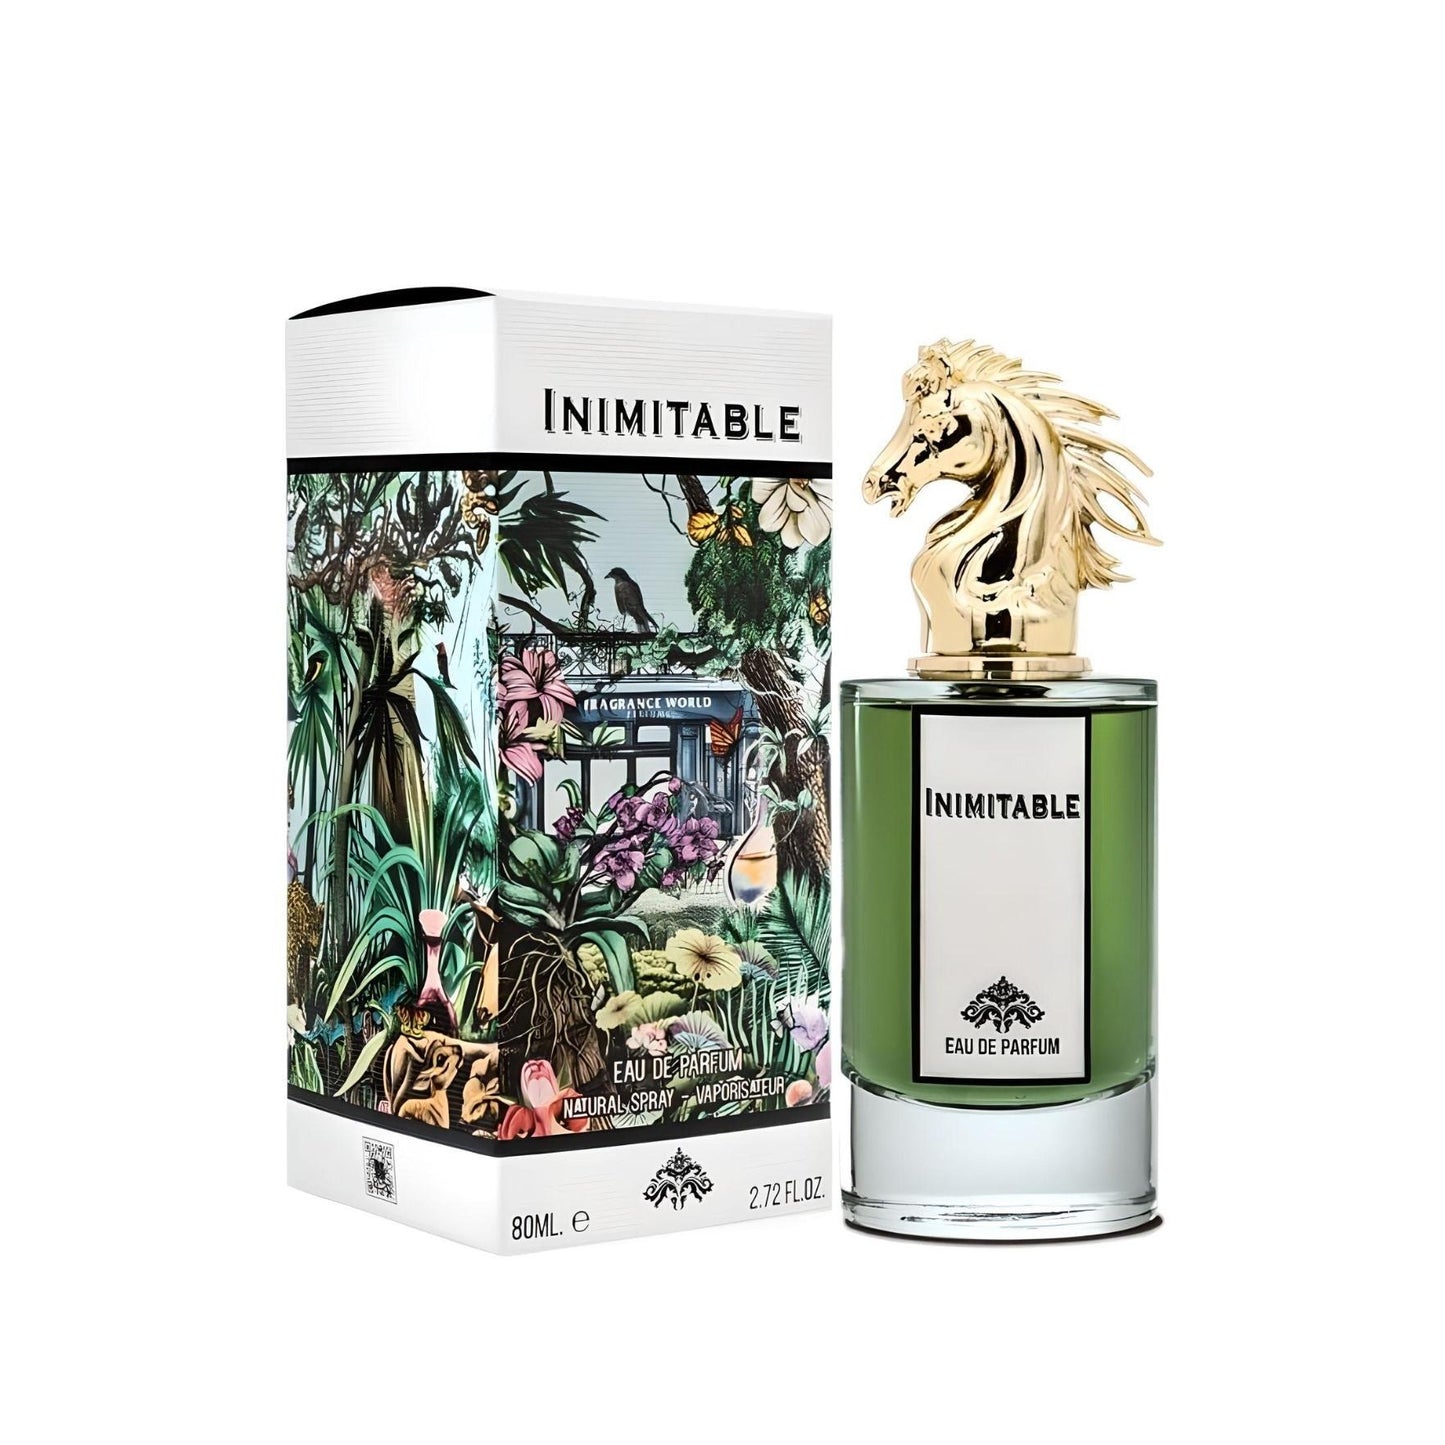 Inimitable EAU de Parfum 80ml Fragrance World